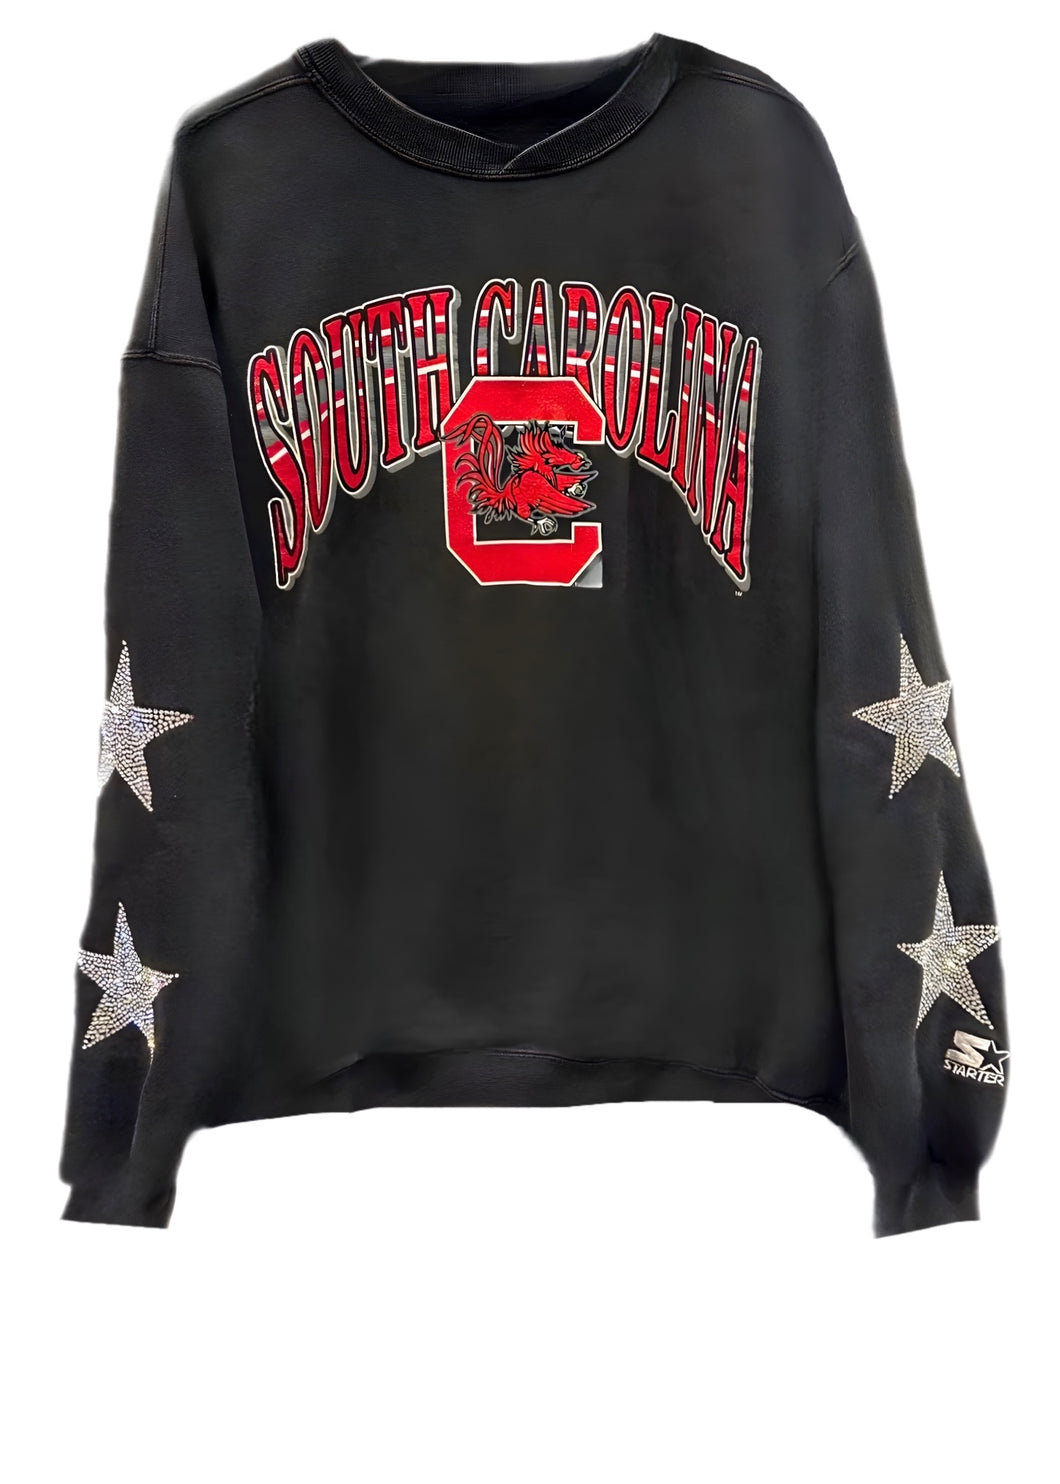 University of South Carolina, One of a KIND Vintage Gamecocks Sweatshirt with Crystal Star Design